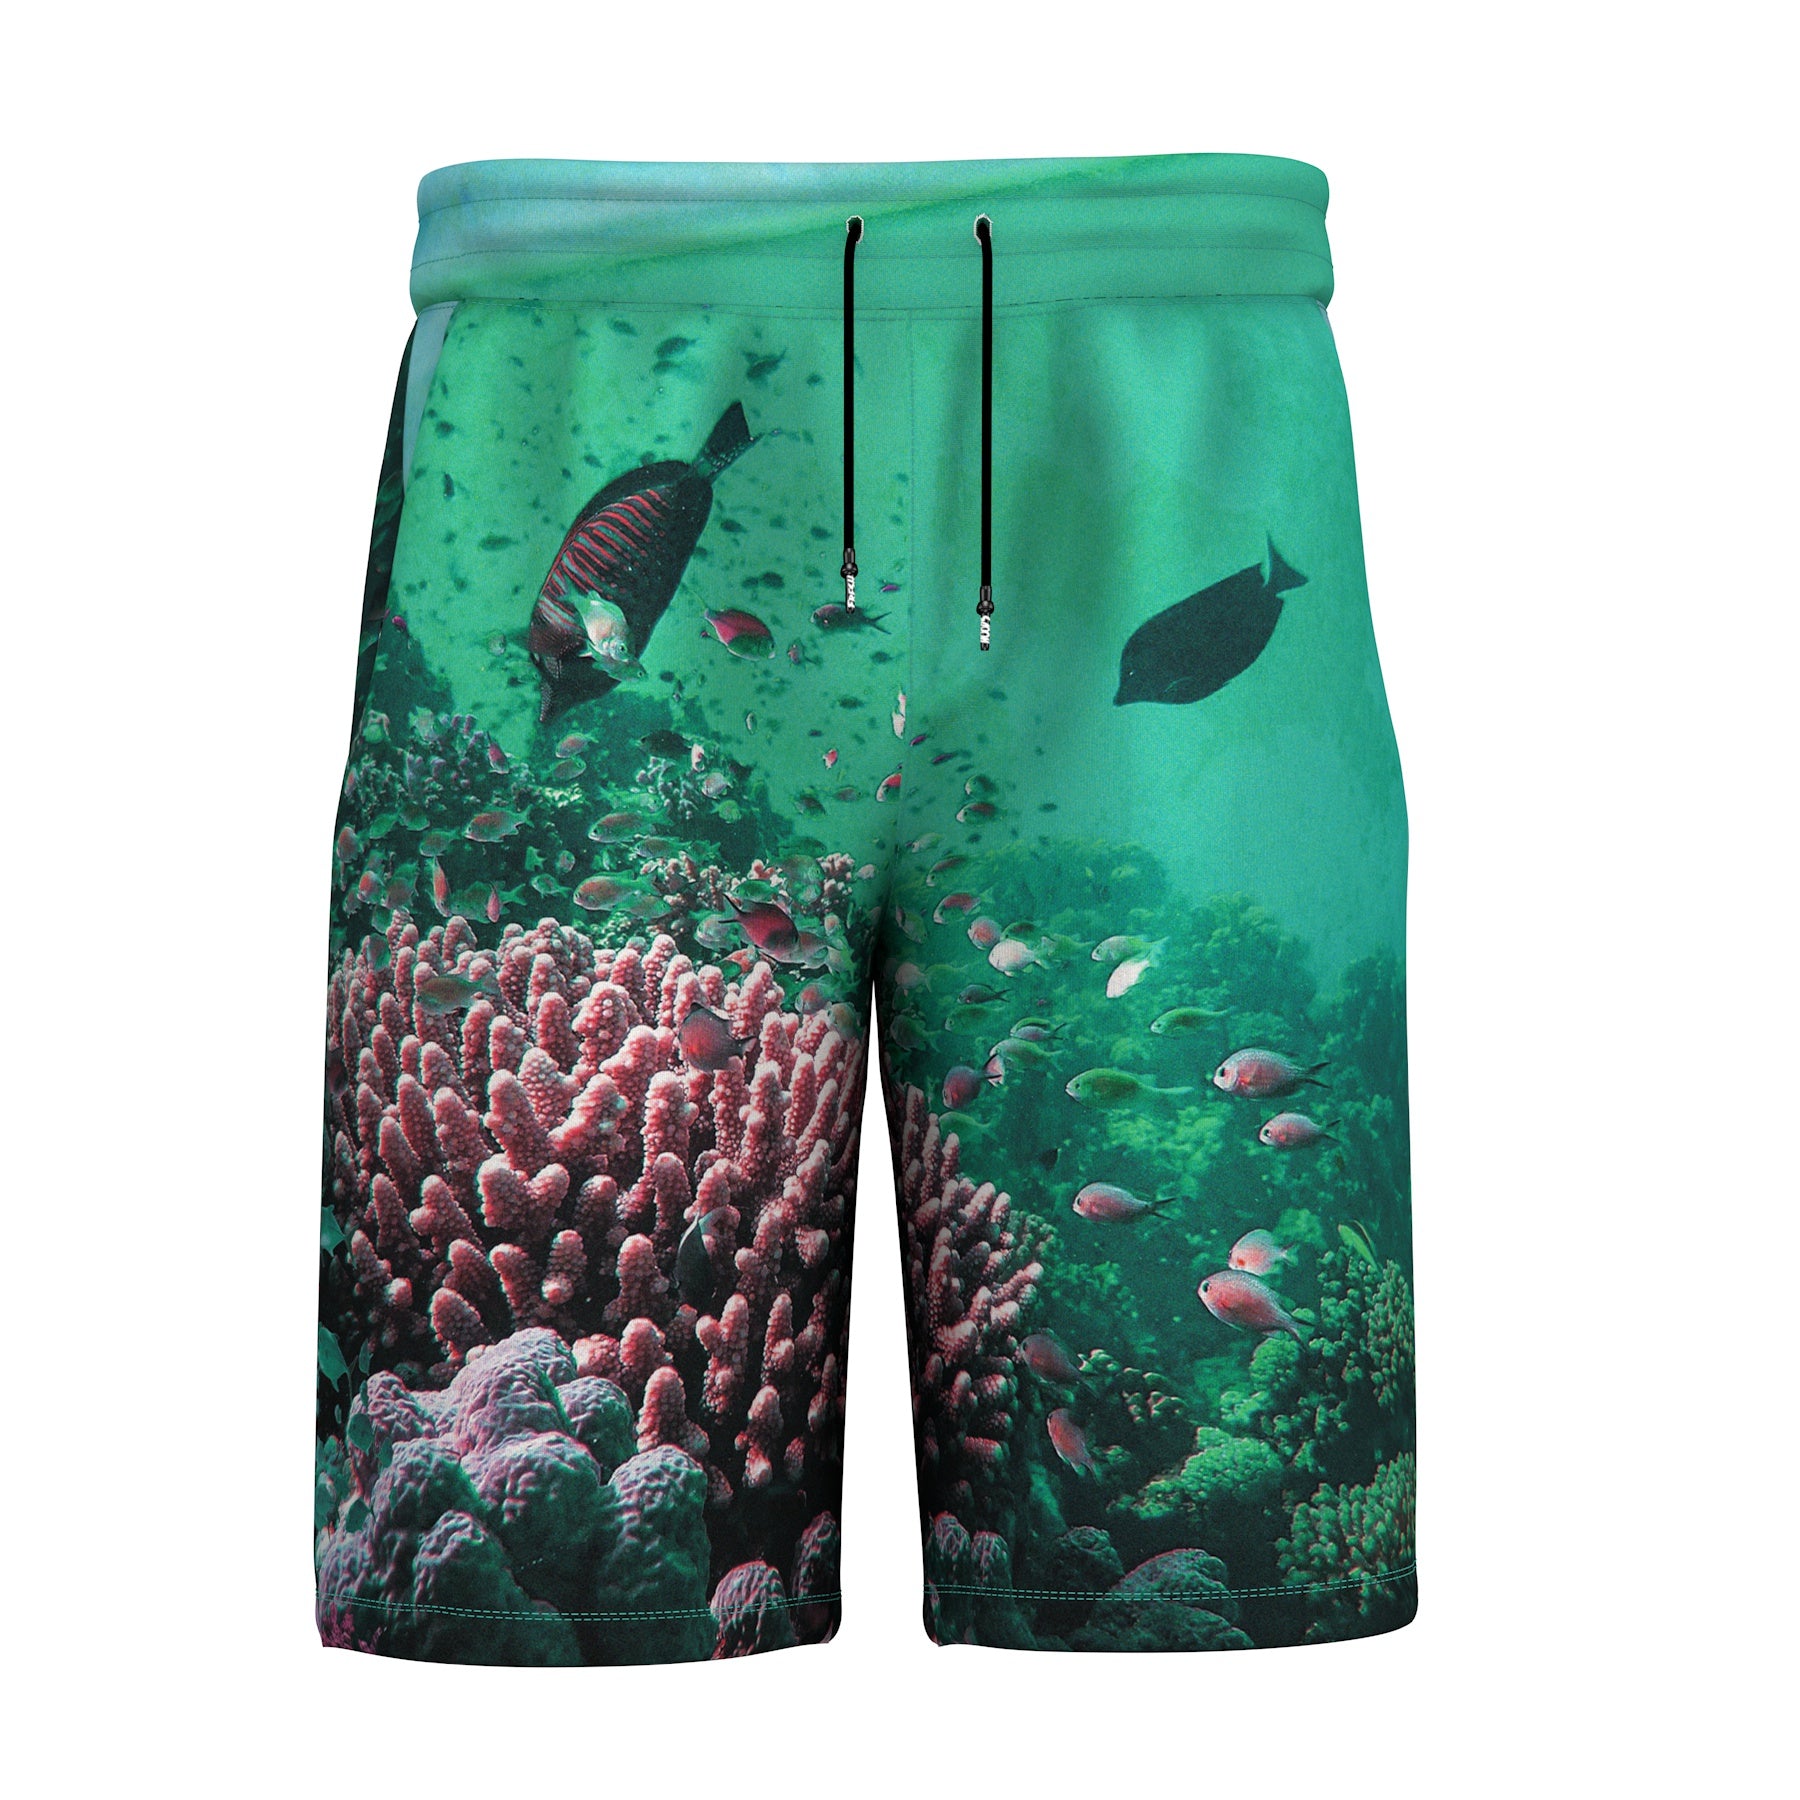 Under The Sea Shorts